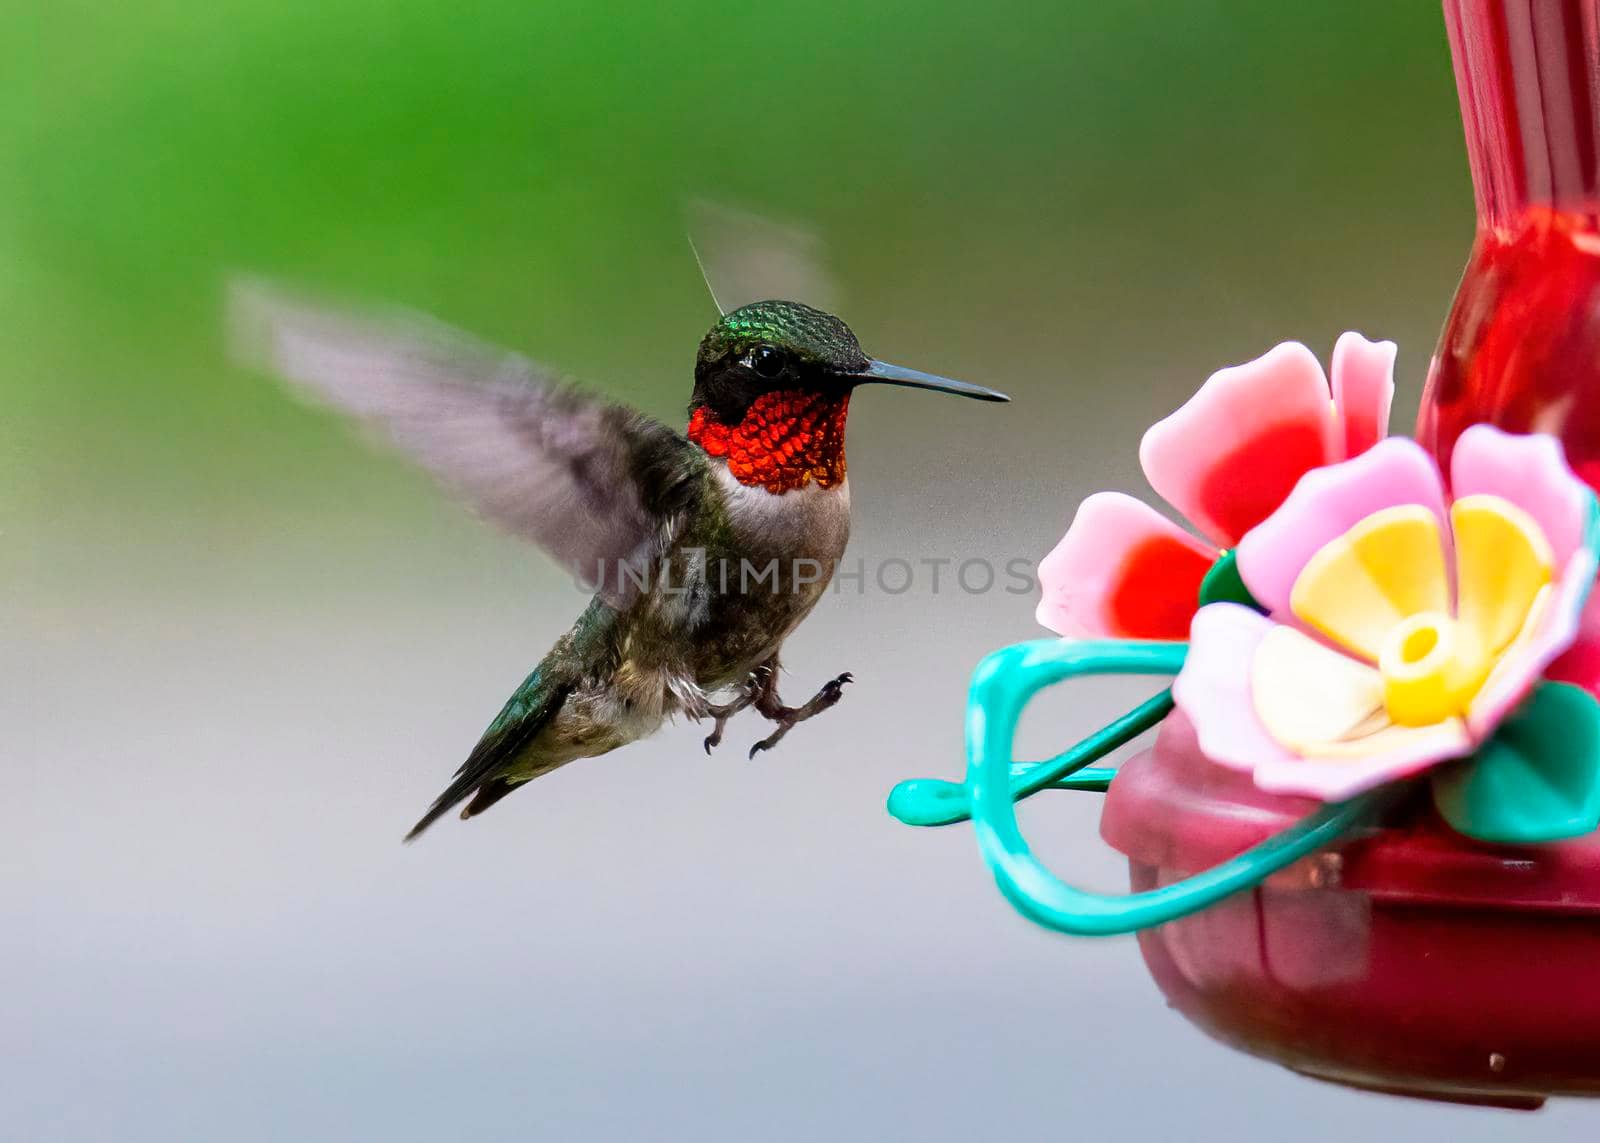 Hummingbird On Approach, Feet Down by CharlieFloyd